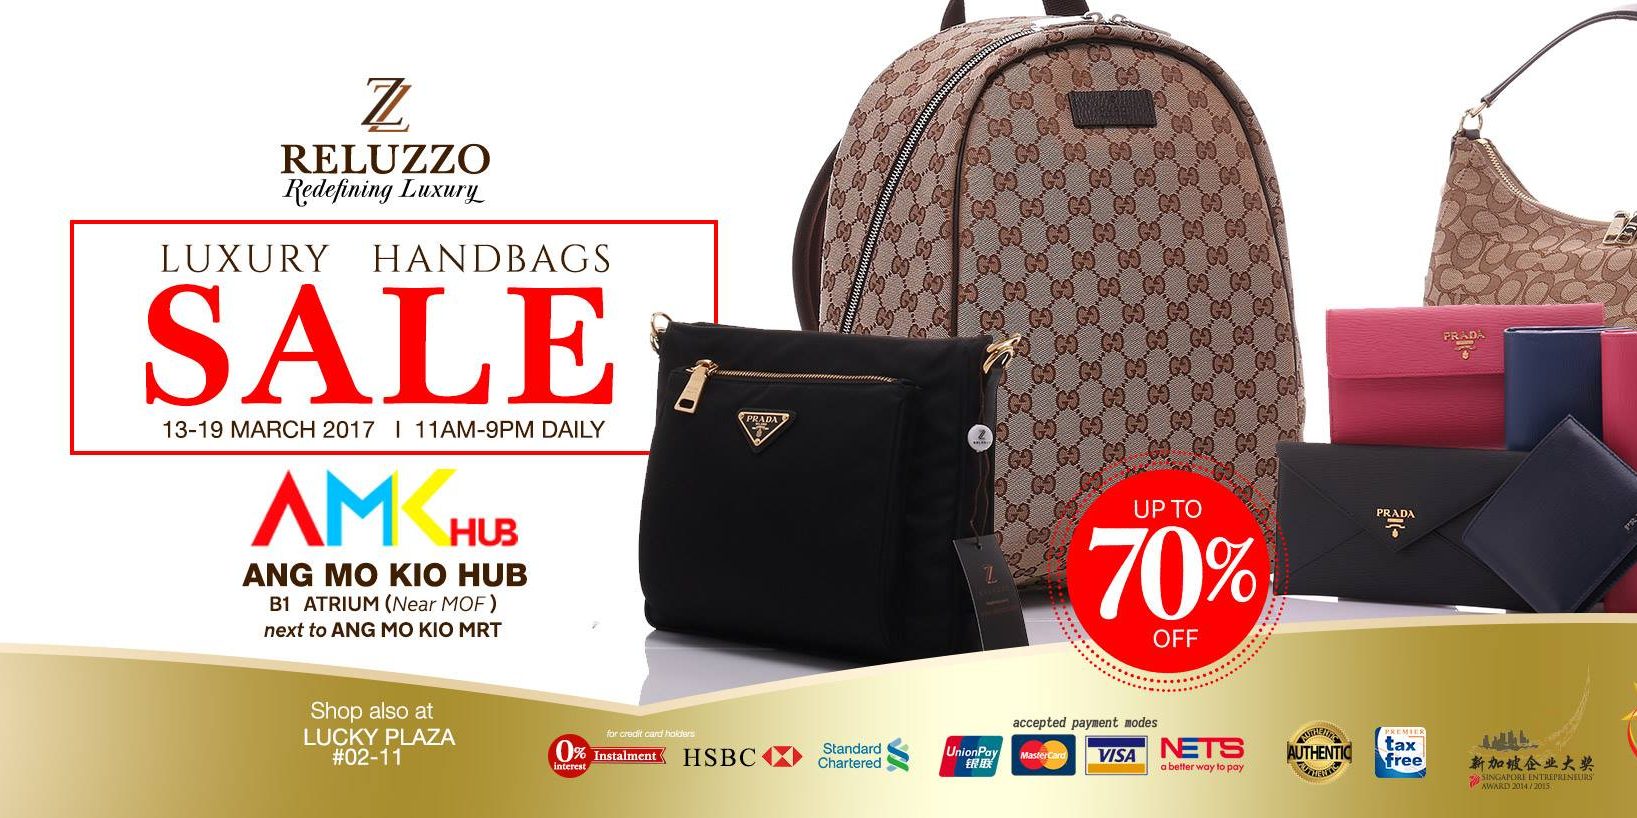 Reluzzo Singapore AMK Hub Luxury Handbag Sale Up to 70% Off Promotion 13-19 Mar 2017